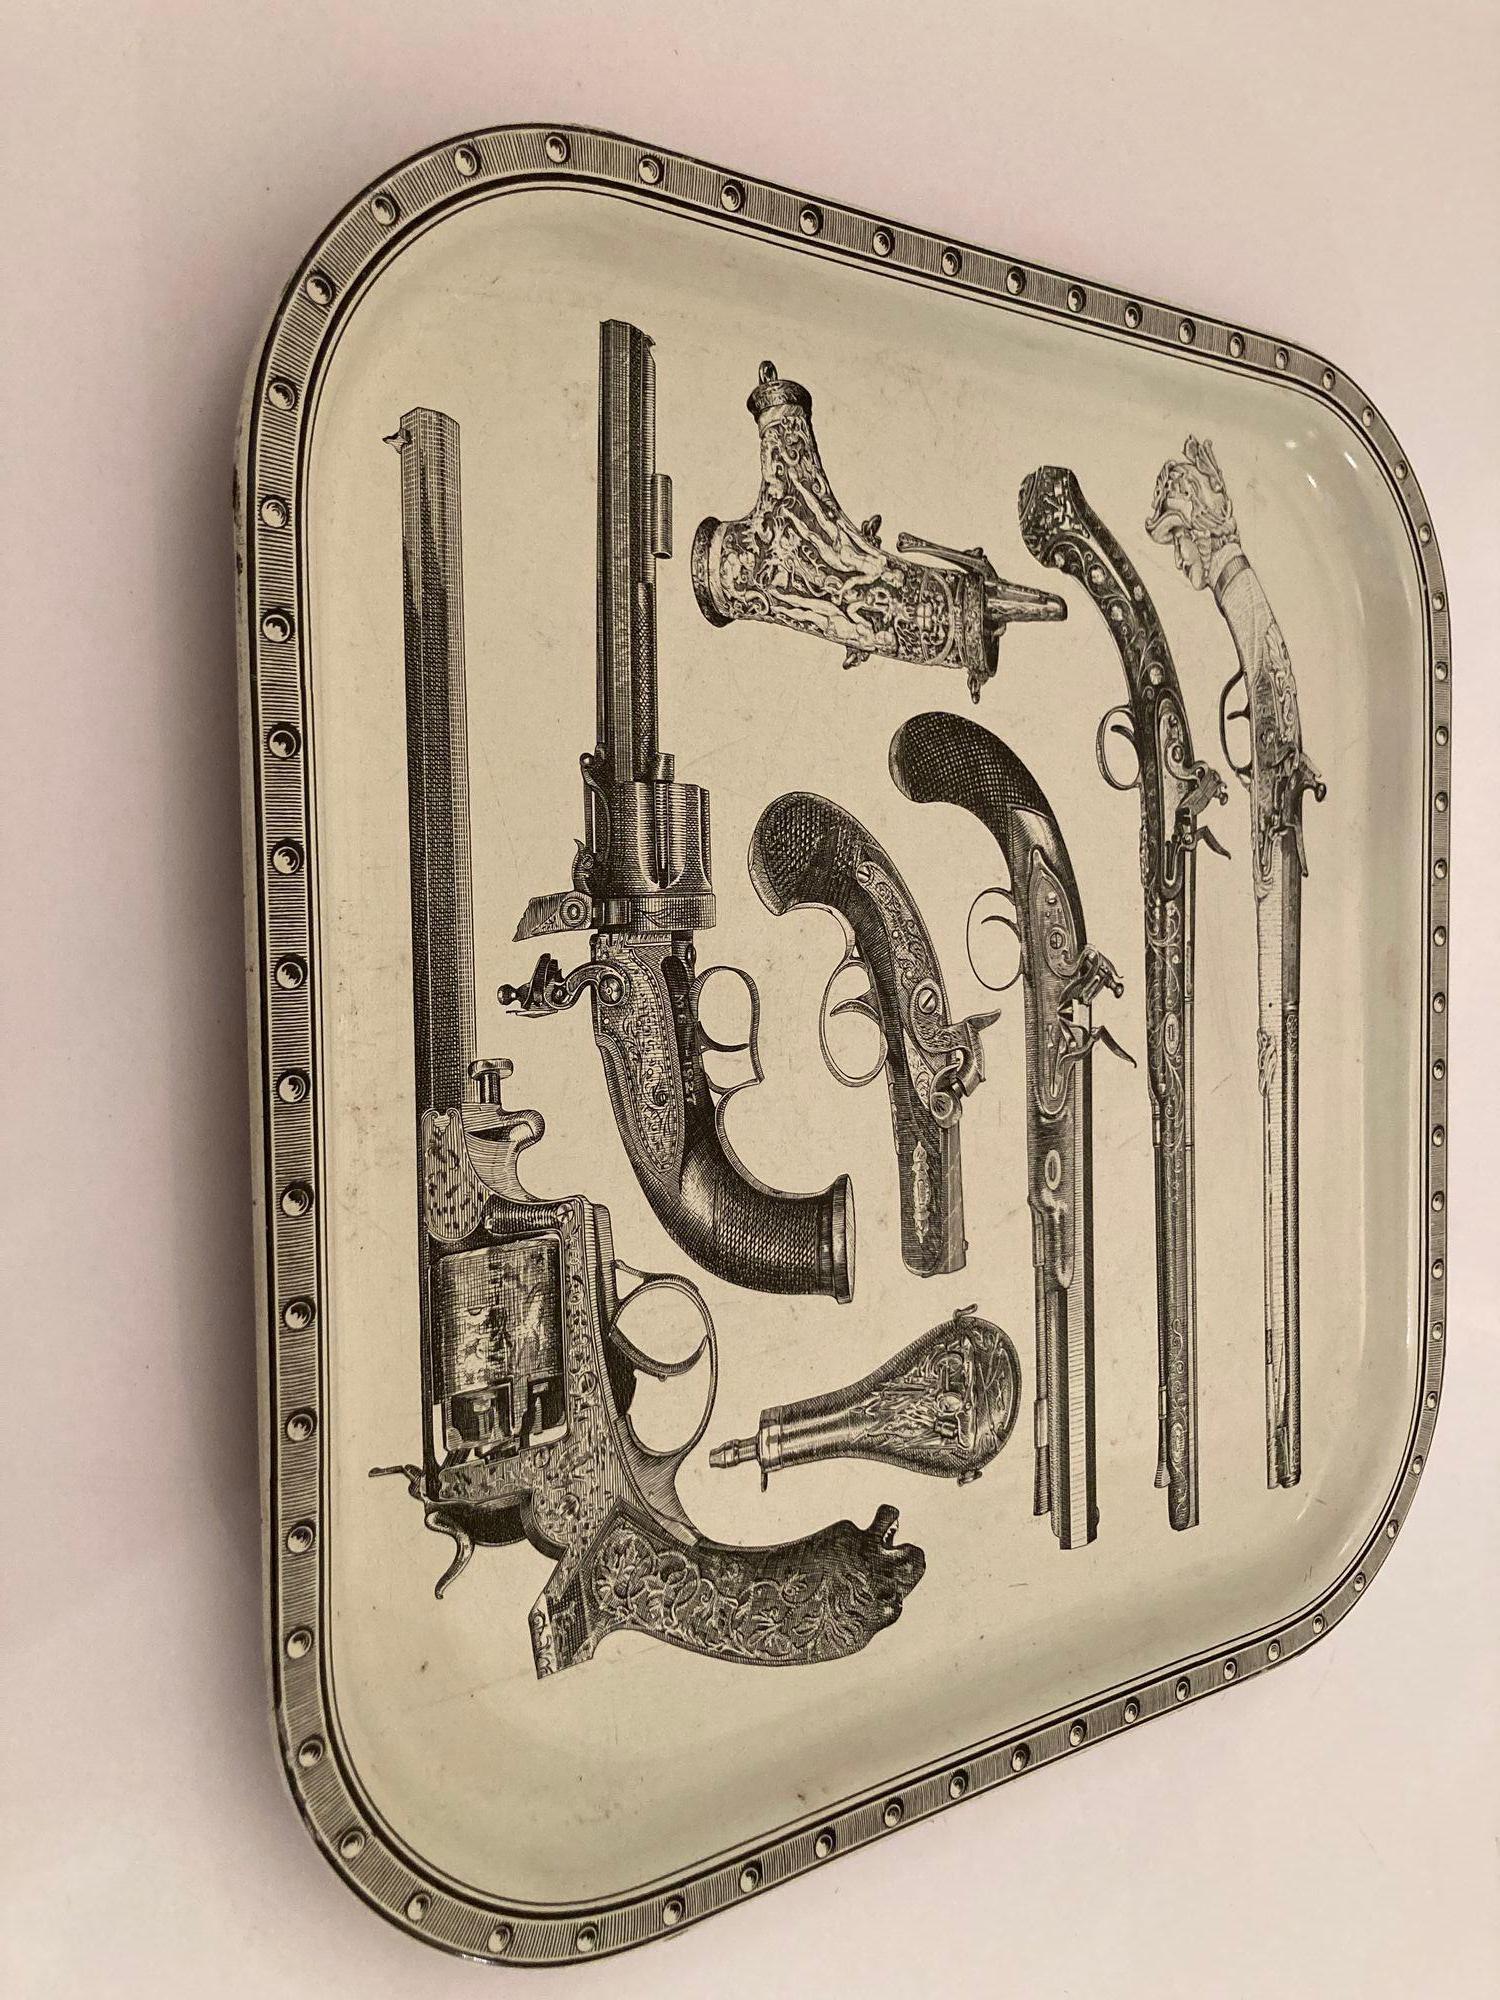 Italian Piero Fornasetti Attributed Pistol Barware Metal Serving Tray, 1960s For Sale